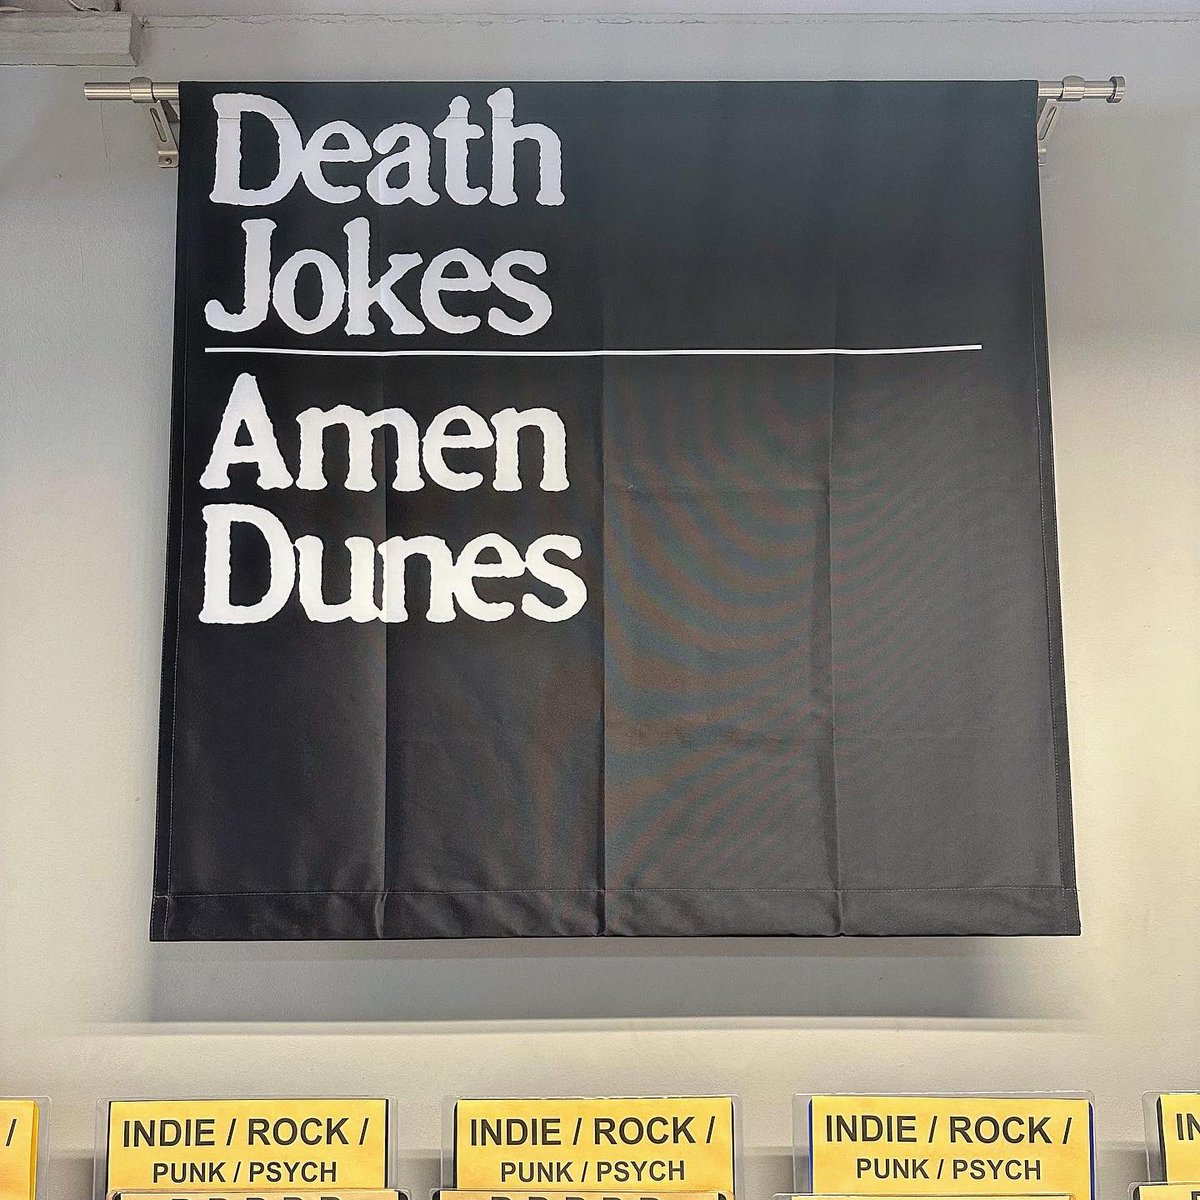 BRAND NEW BANNER Amen Dunes - ‘Death Jokes’ piccadillyrecords.com/153609/Amen-Du… @amendunes @subpop